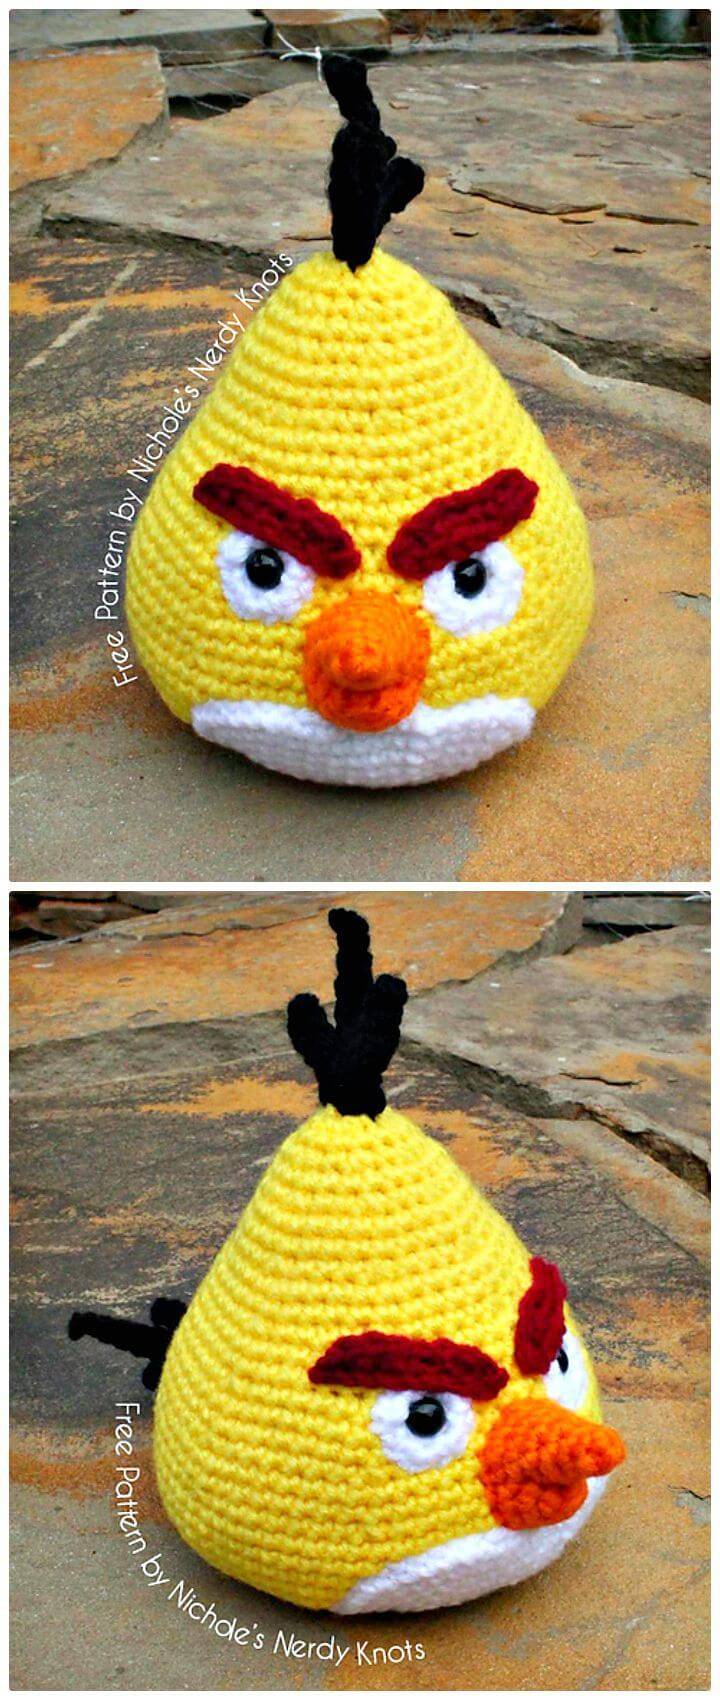 Free Crochet Chuck the Angry Bird Amigurumi Pattern